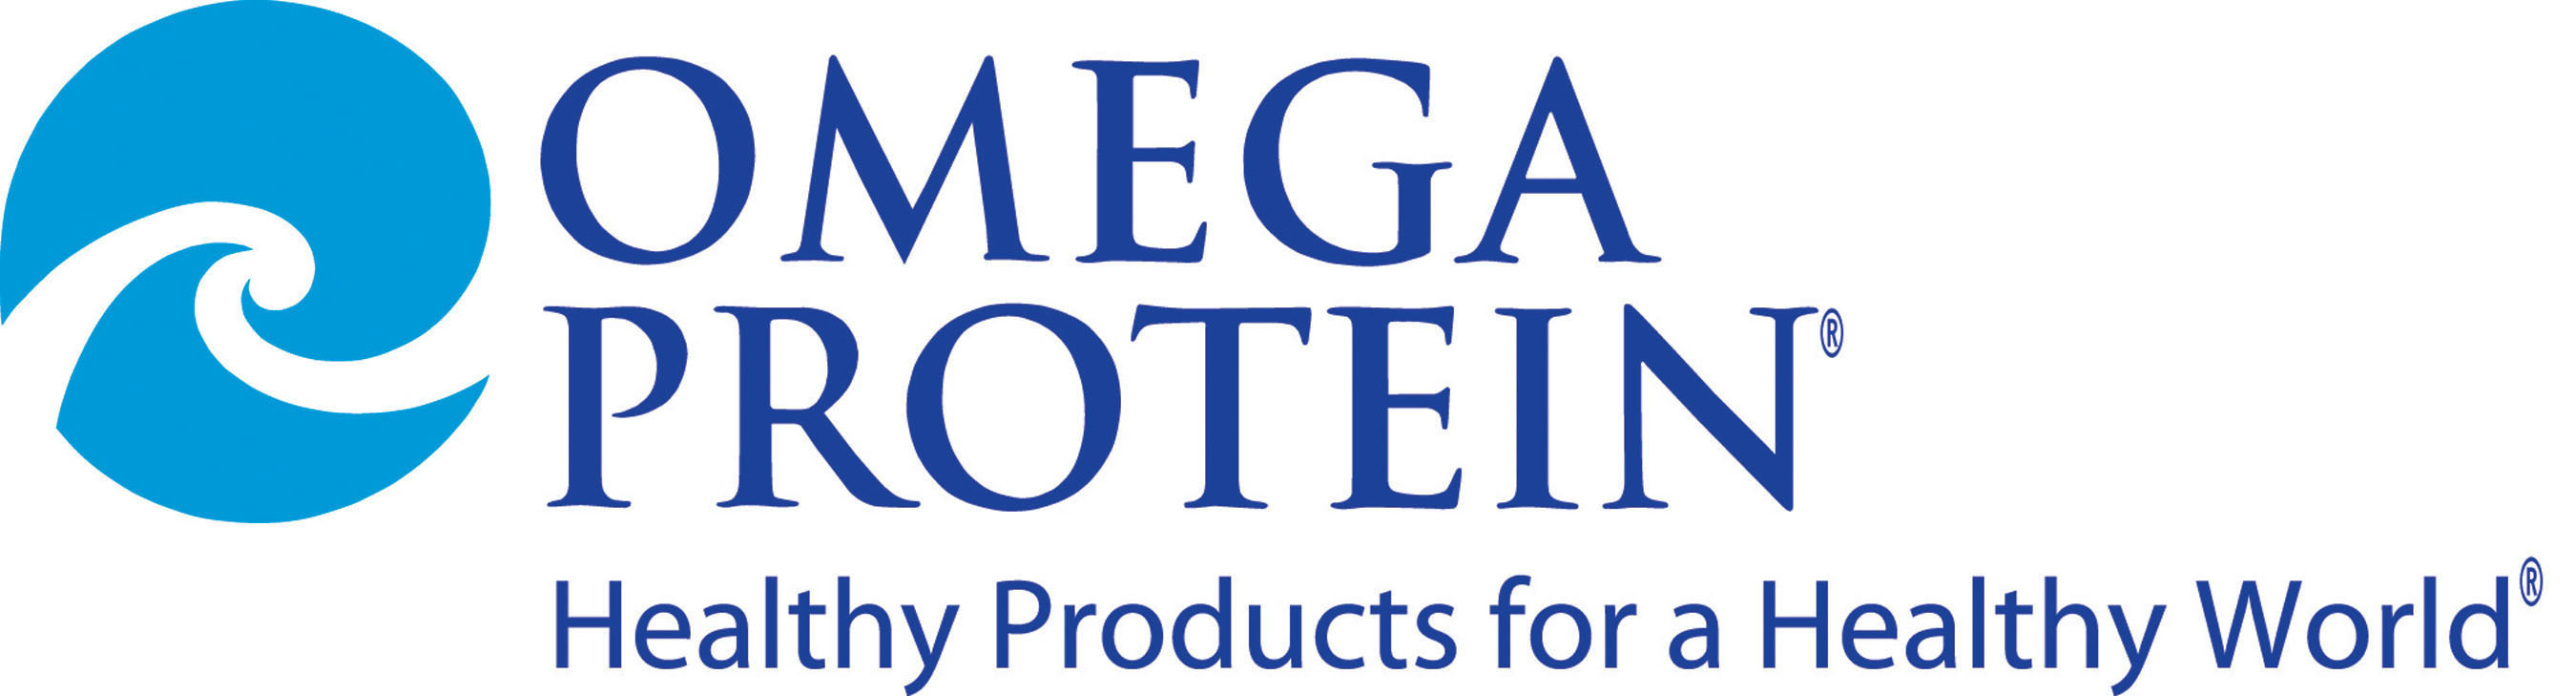 Omega Protein Corporation Logo. (PRNewsFoto/Omega Protein Corporation) (PRNewsFoto/)